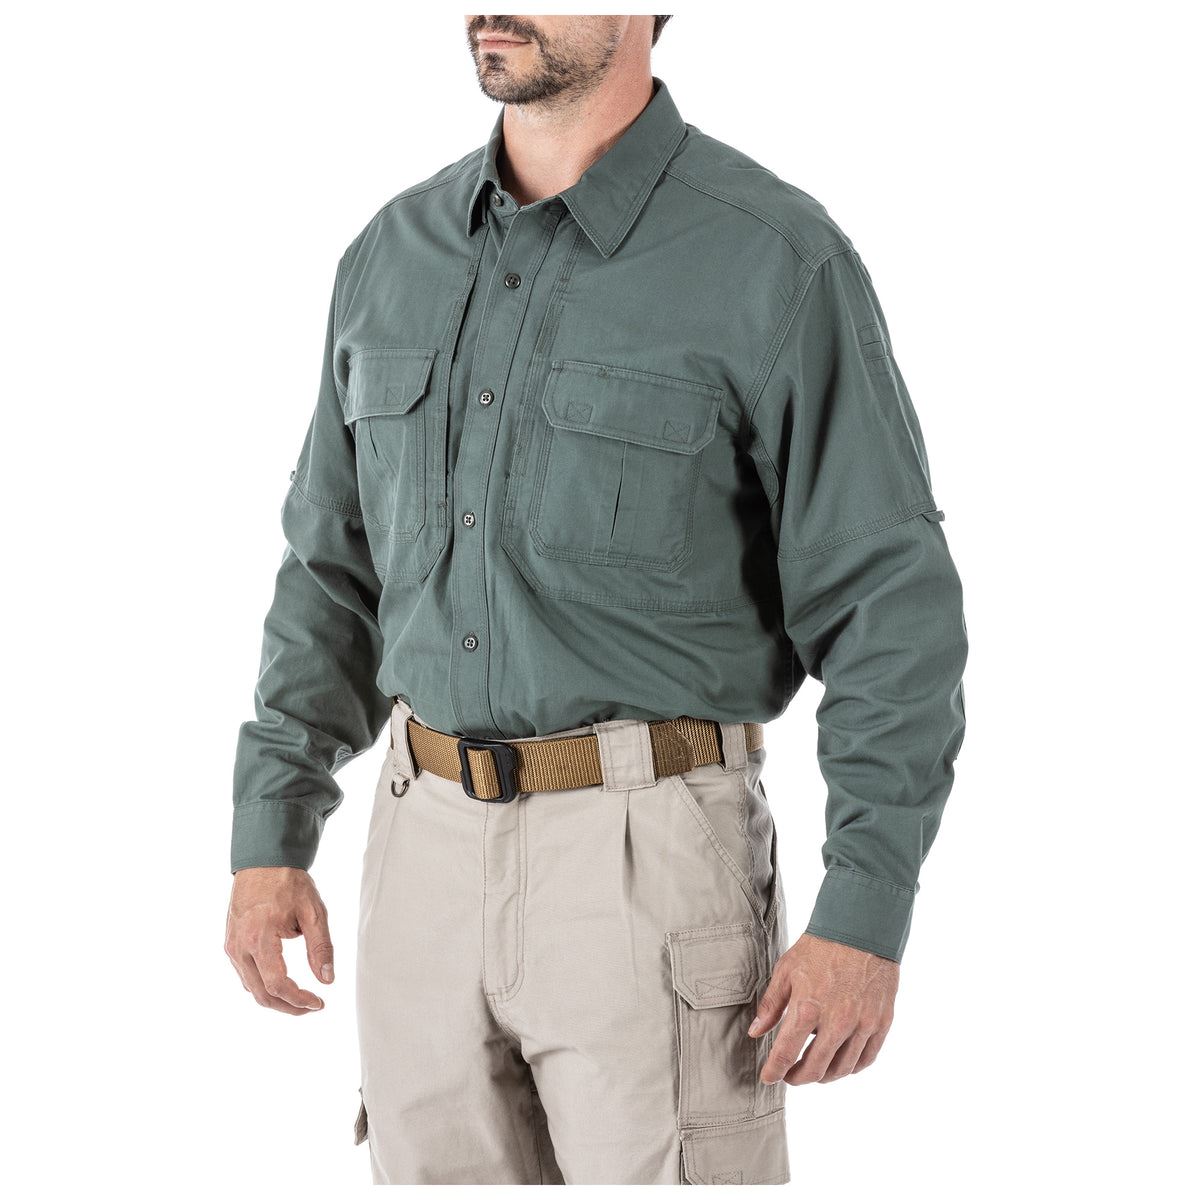 5.11 Tactical® Long Sleeve Shirt